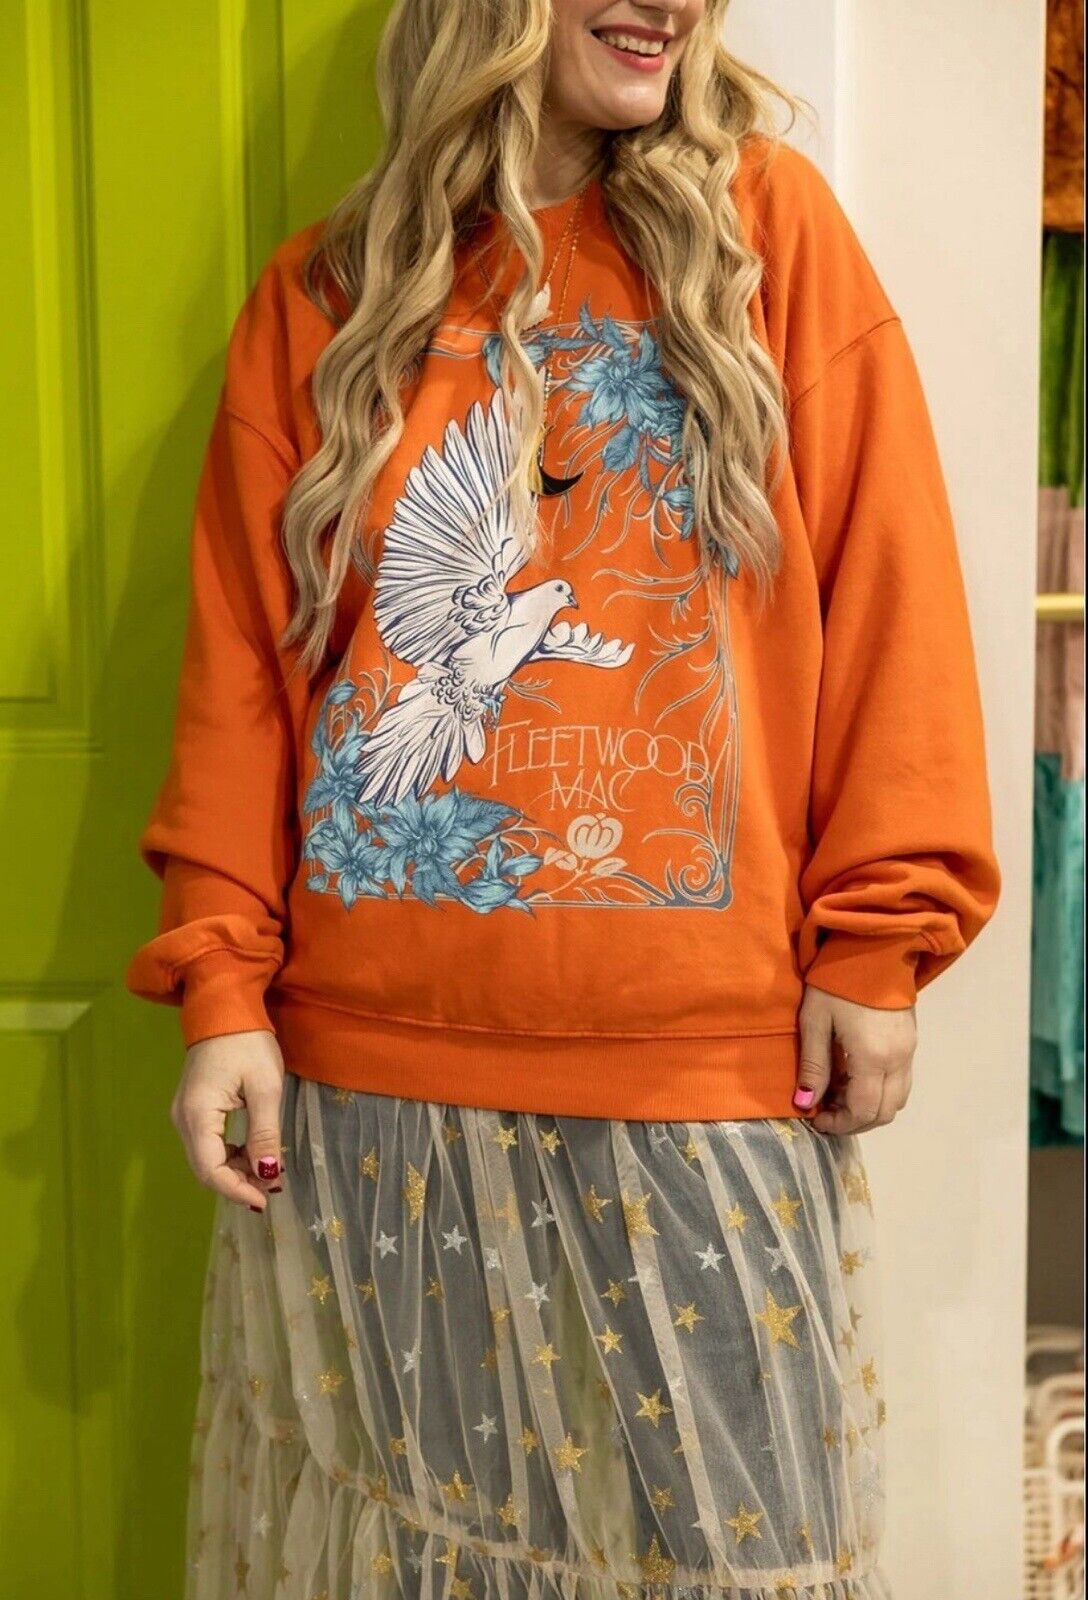 Daydreamer NWOT Orange Fleetwood Mac Oversized Crewneck Sweatshirt - Size Medium